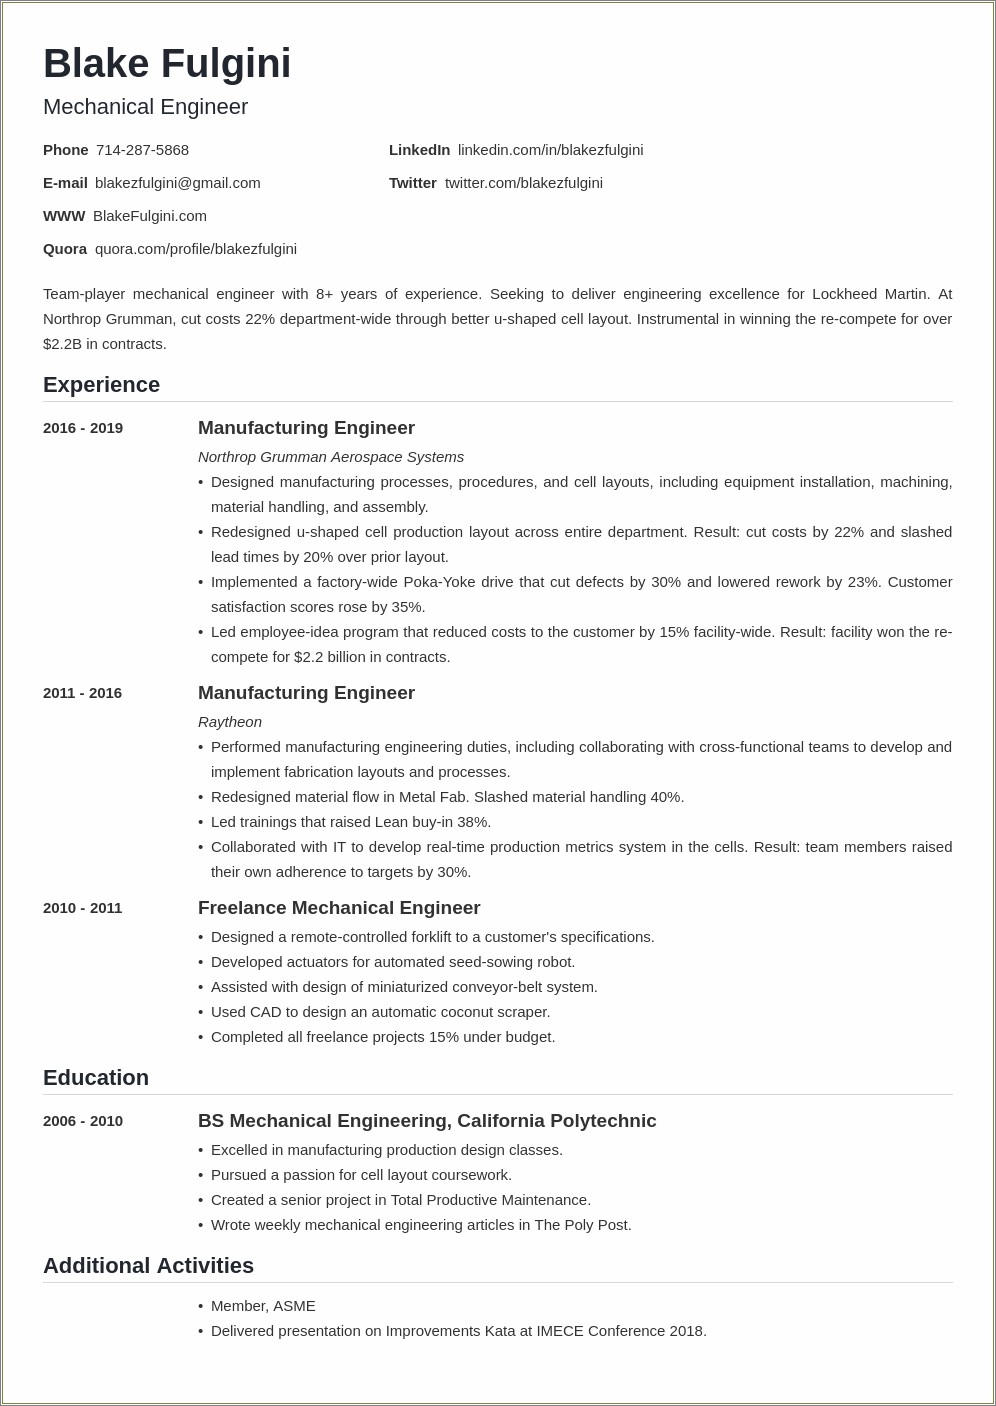 Resume Format For Mechanical Engineering Job